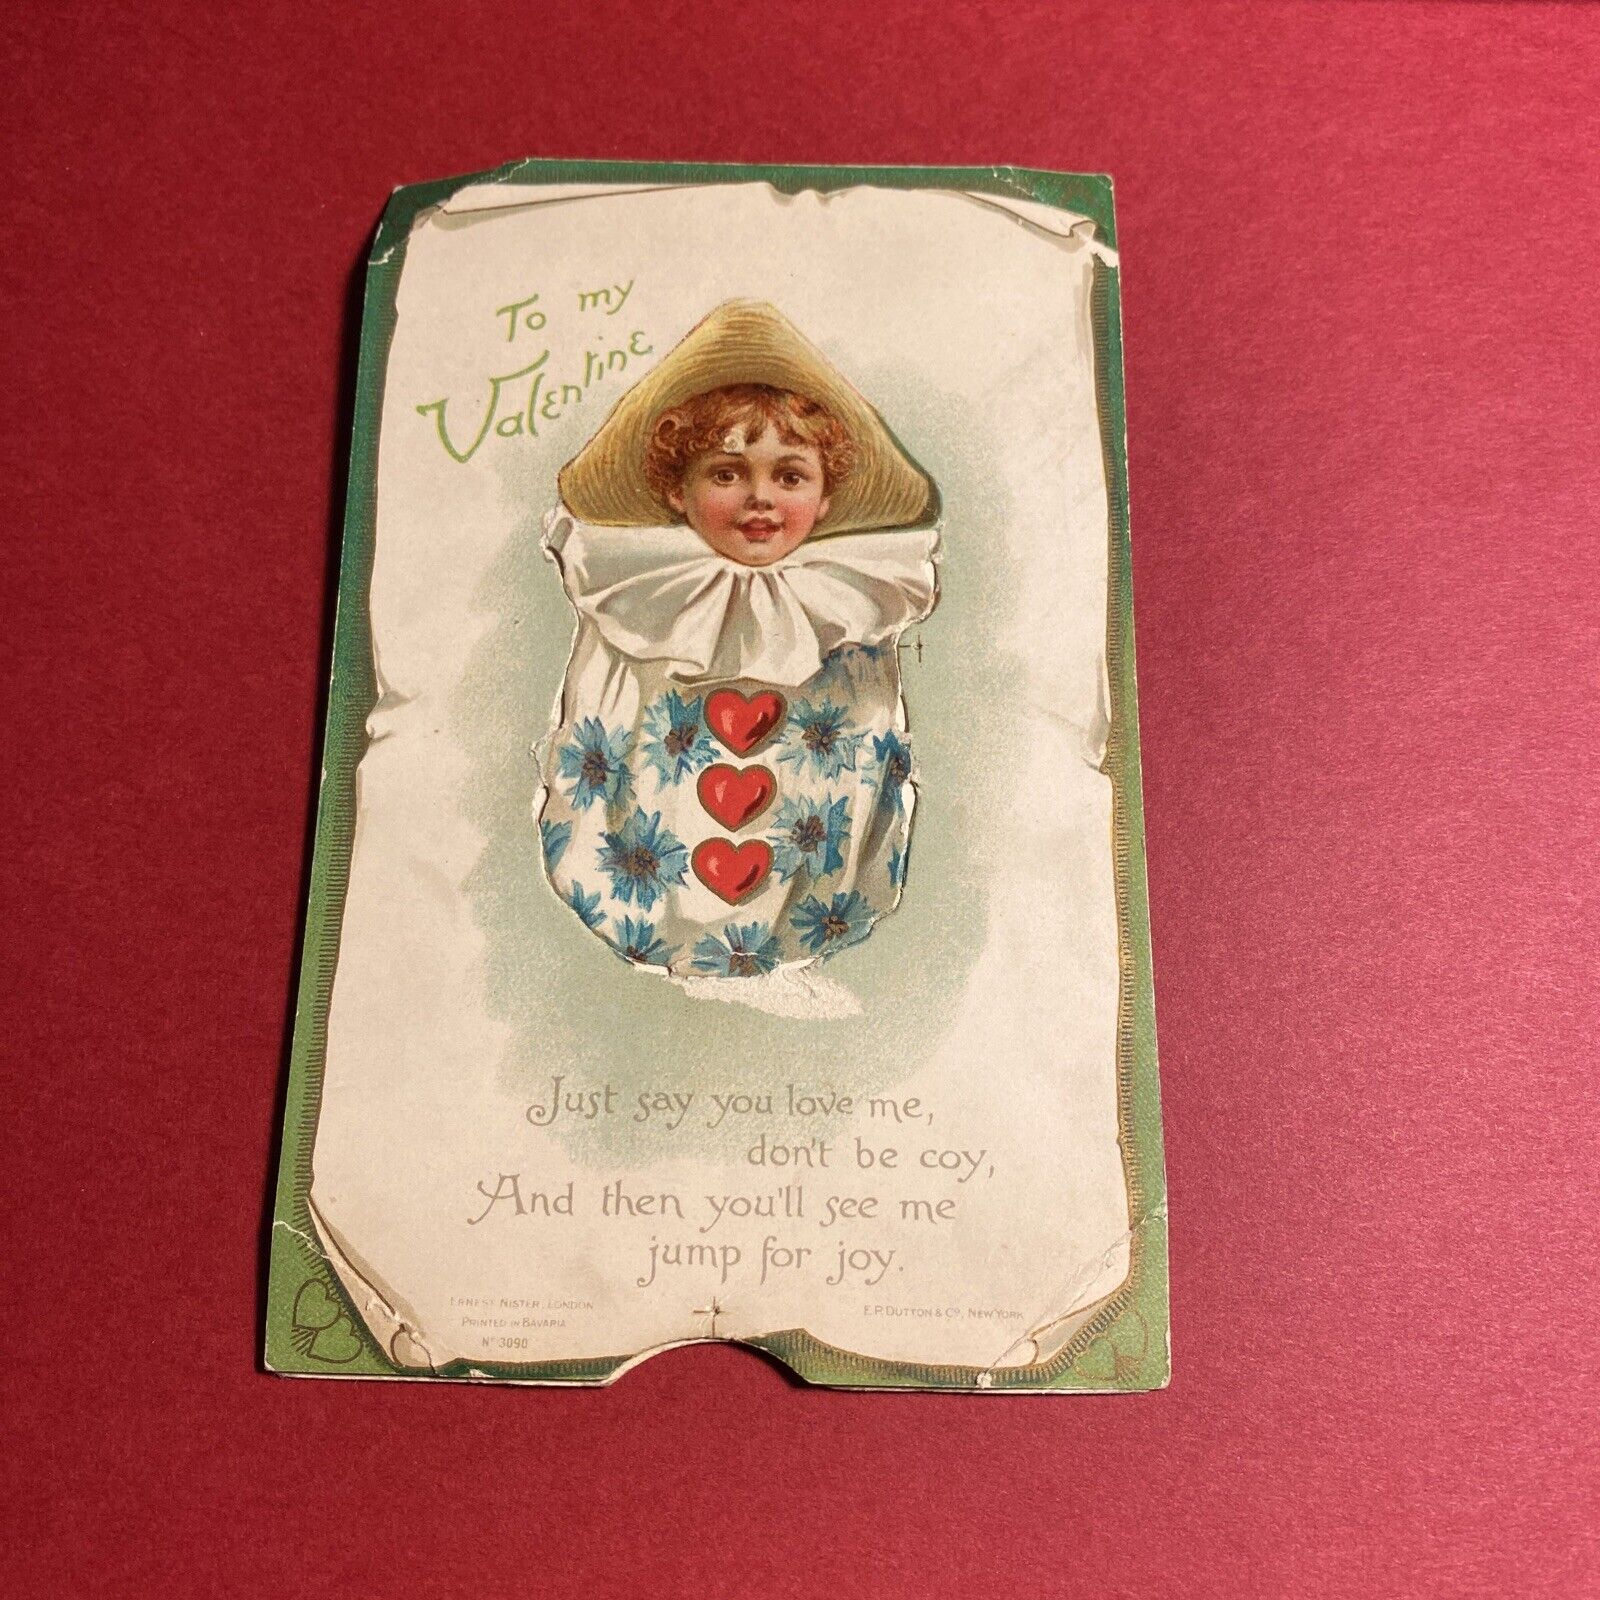 (1) Antique “To My Valentine” Romantic Card 